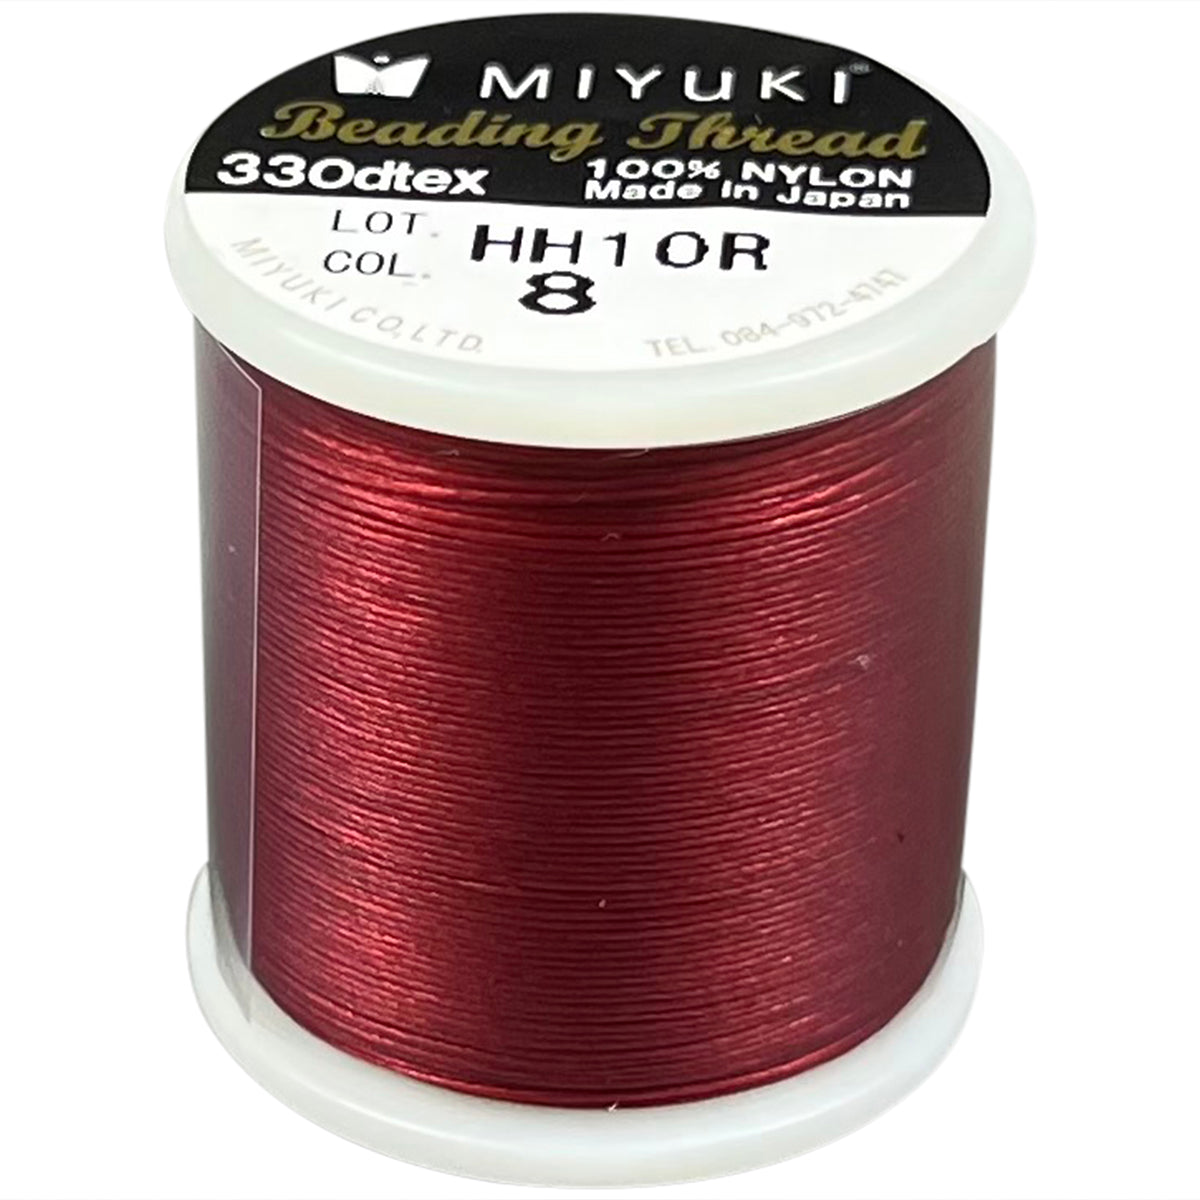 Miyuki Beading Thread Black 50 Meter Spool 330dtex